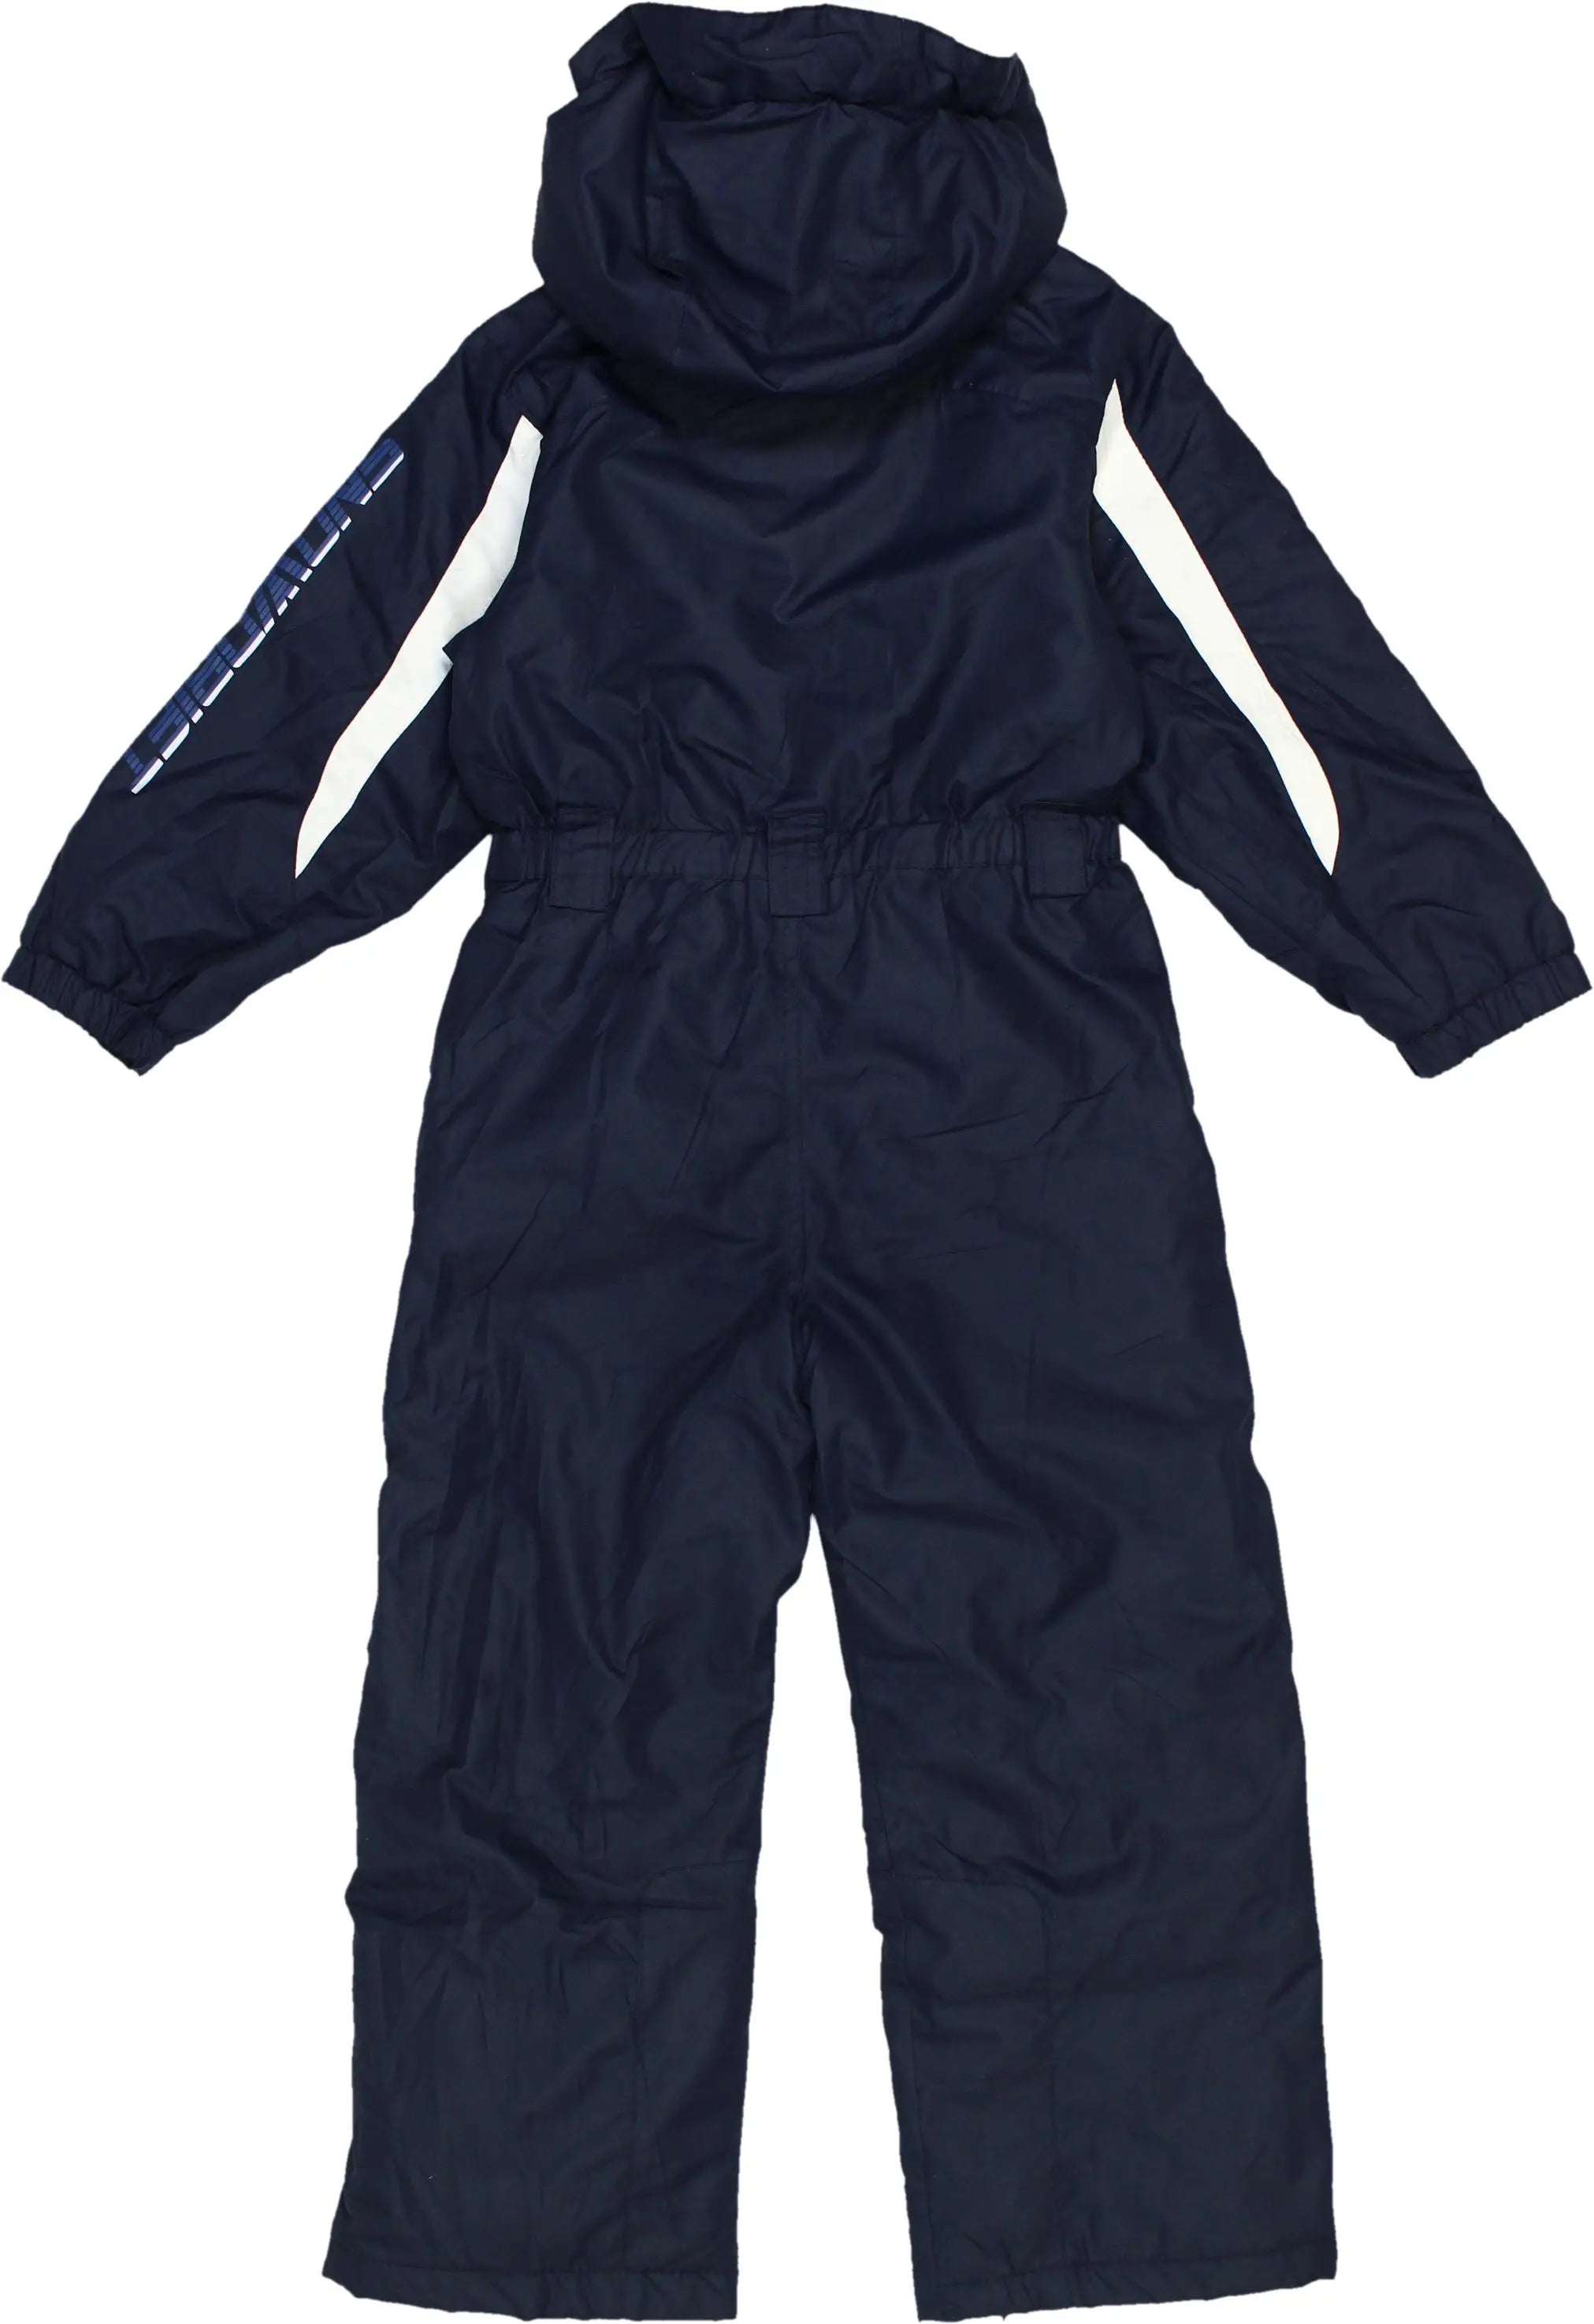 Carverace - Dark Blue Ski Suit- ThriftTale.com - Vintage and second handclothing